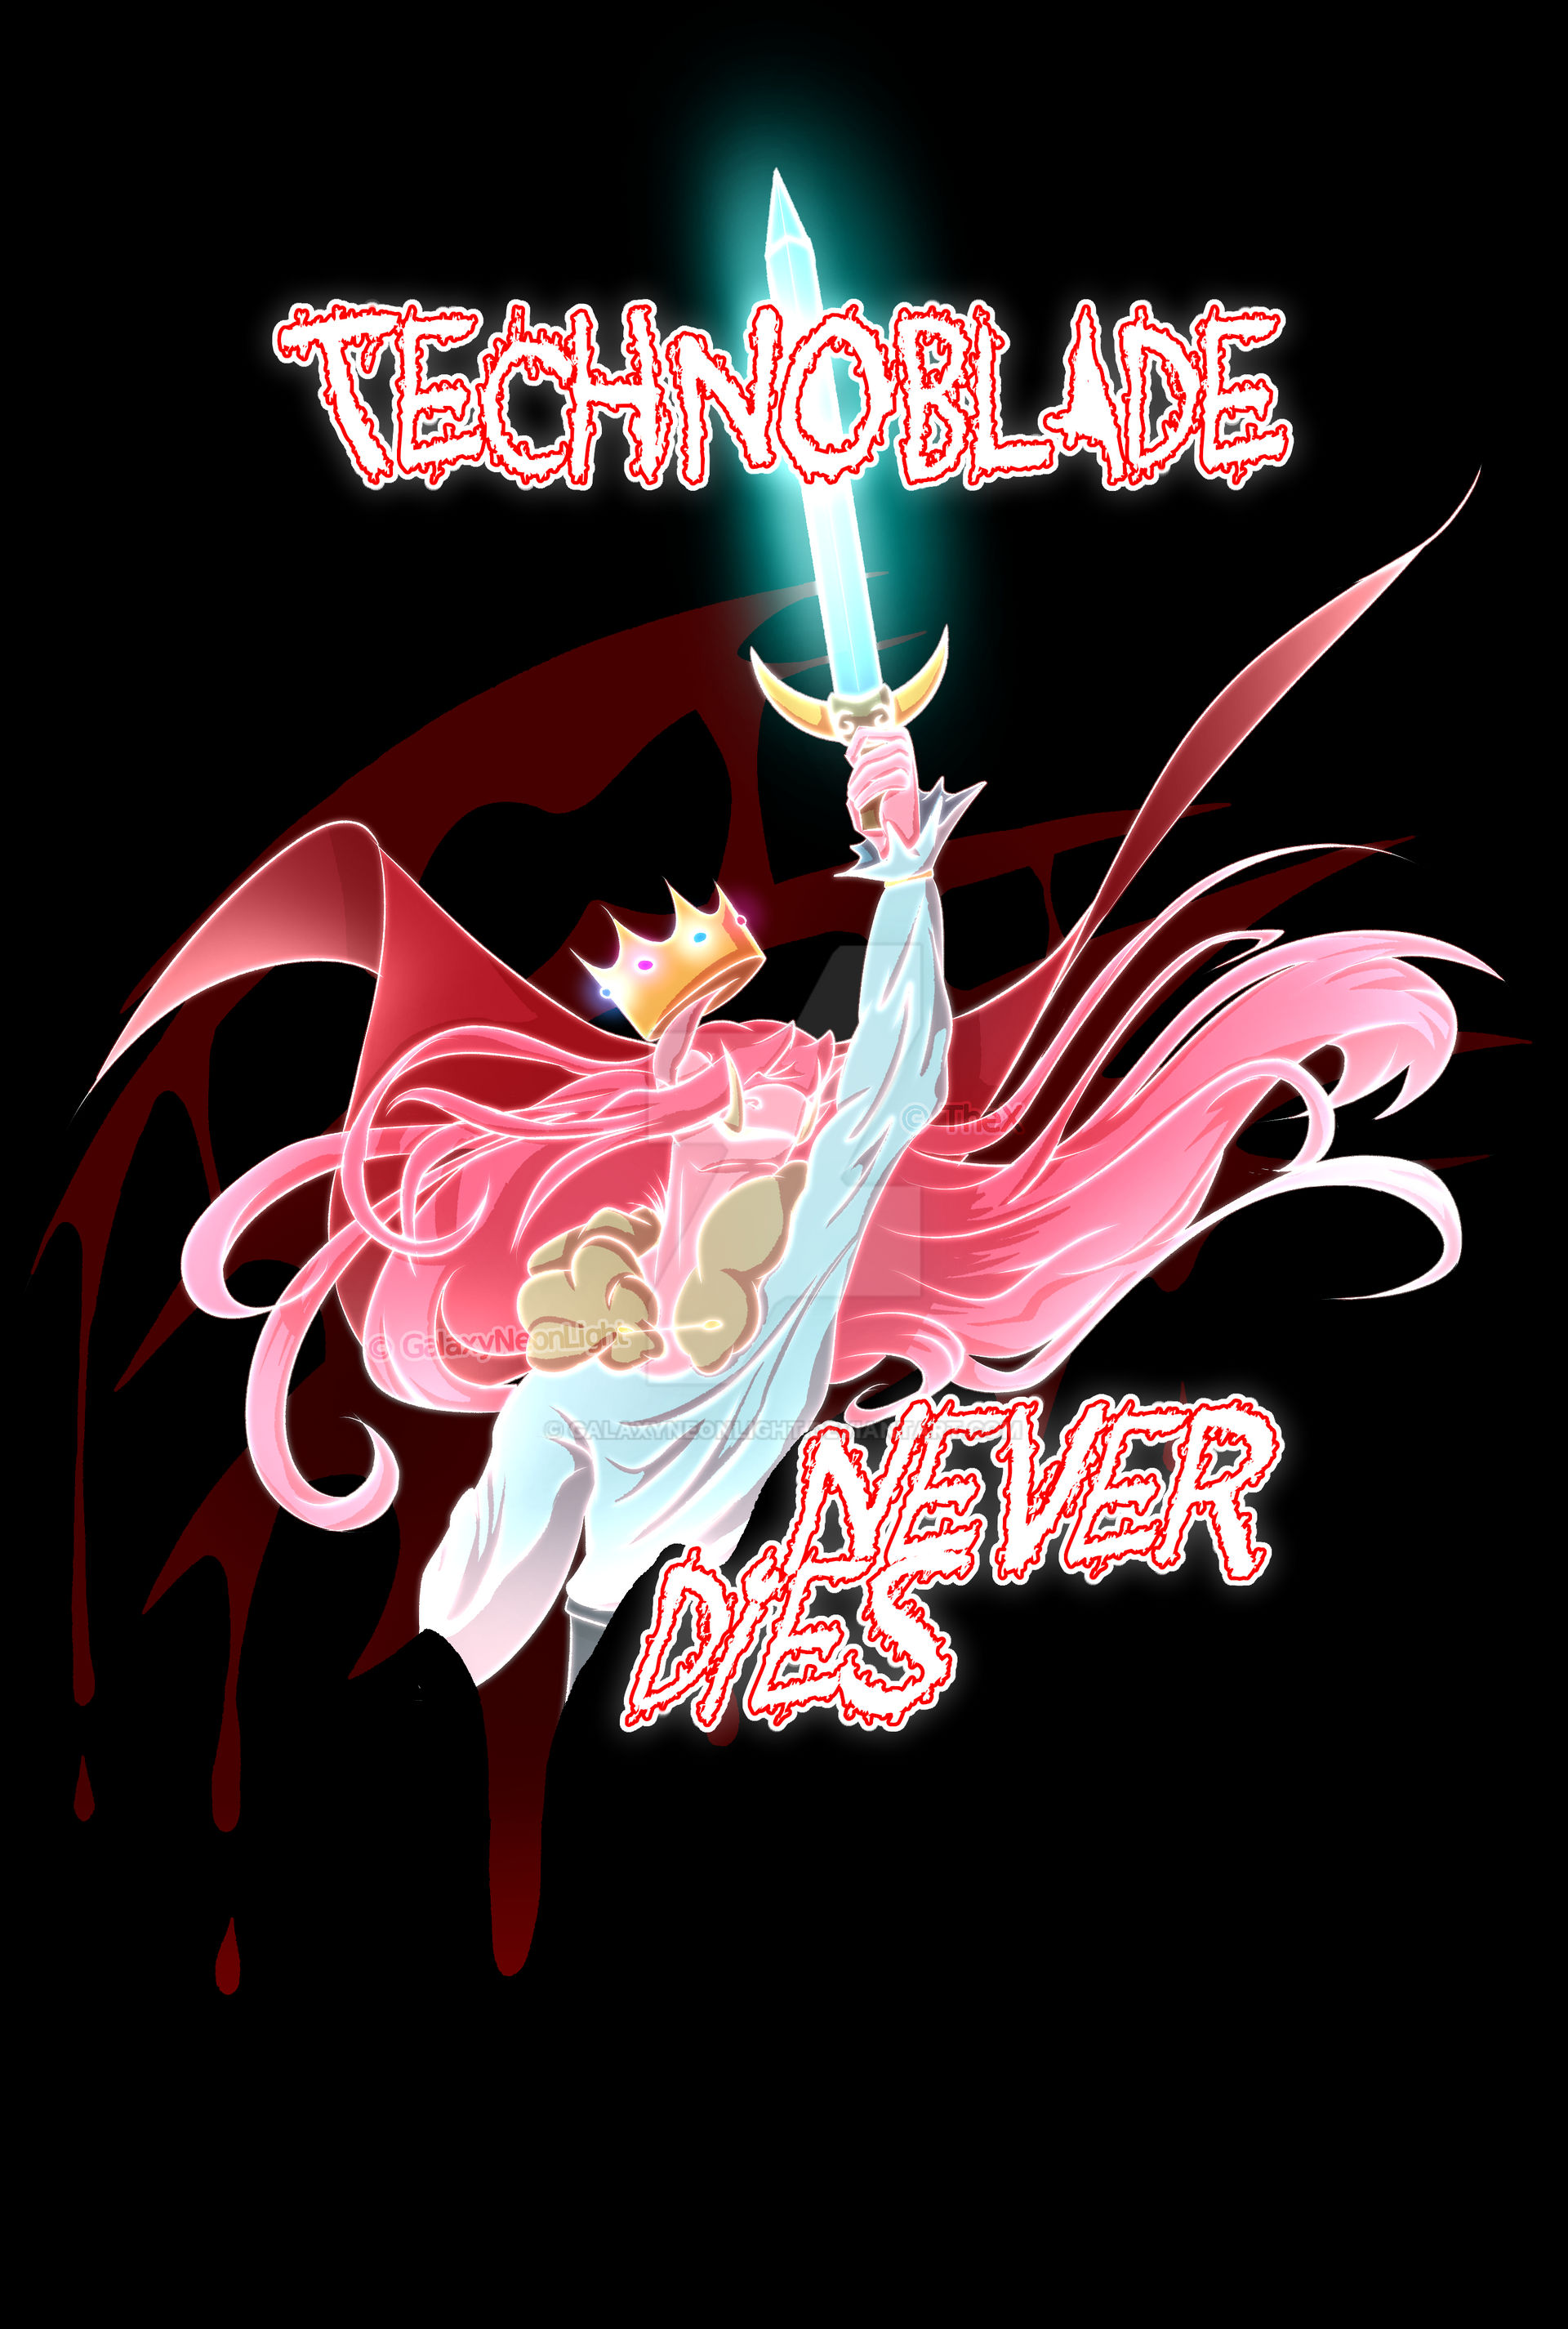 Technoblade Never Dies by GalaxyNeonLight on DeviantArt